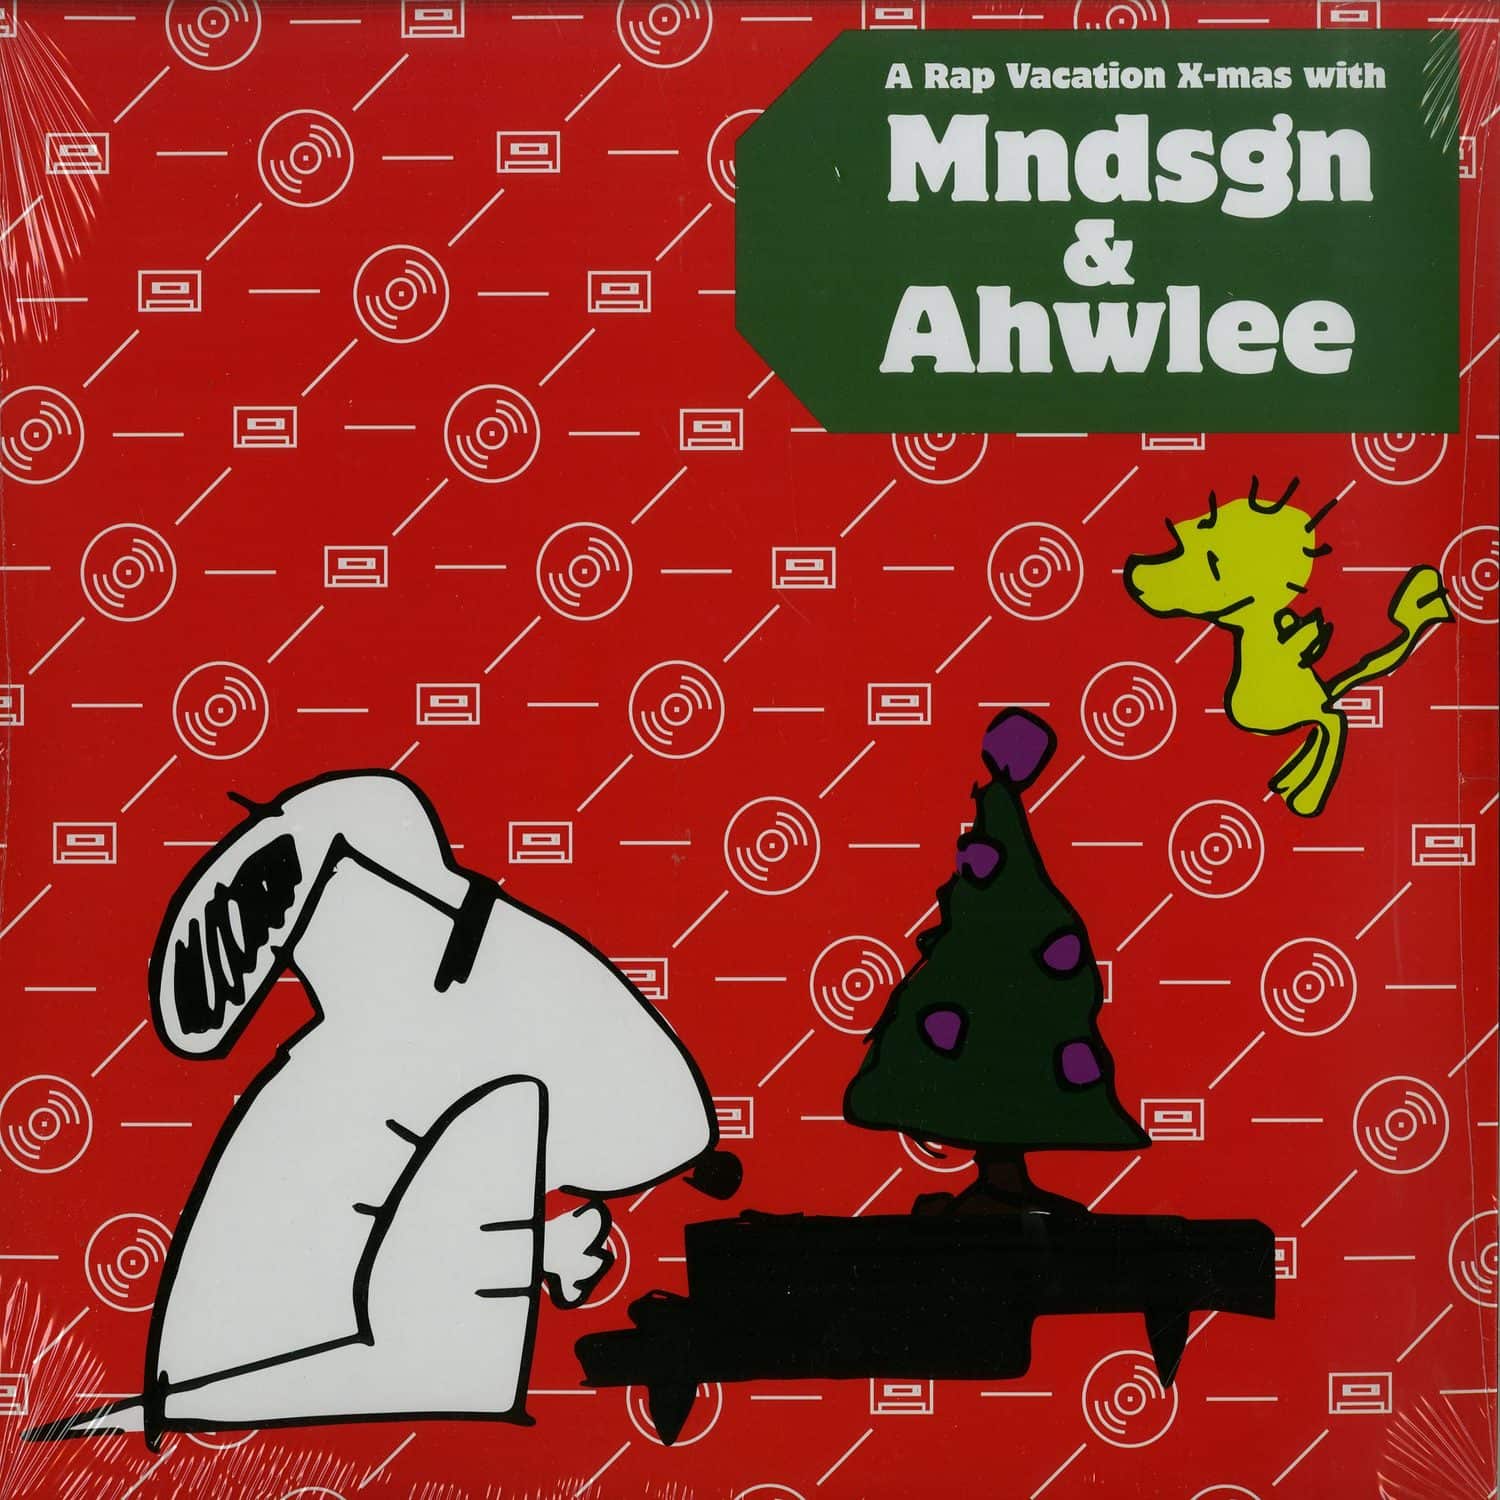 Mndsgn & Ahwlee - A RAP VACATION X-MAS 